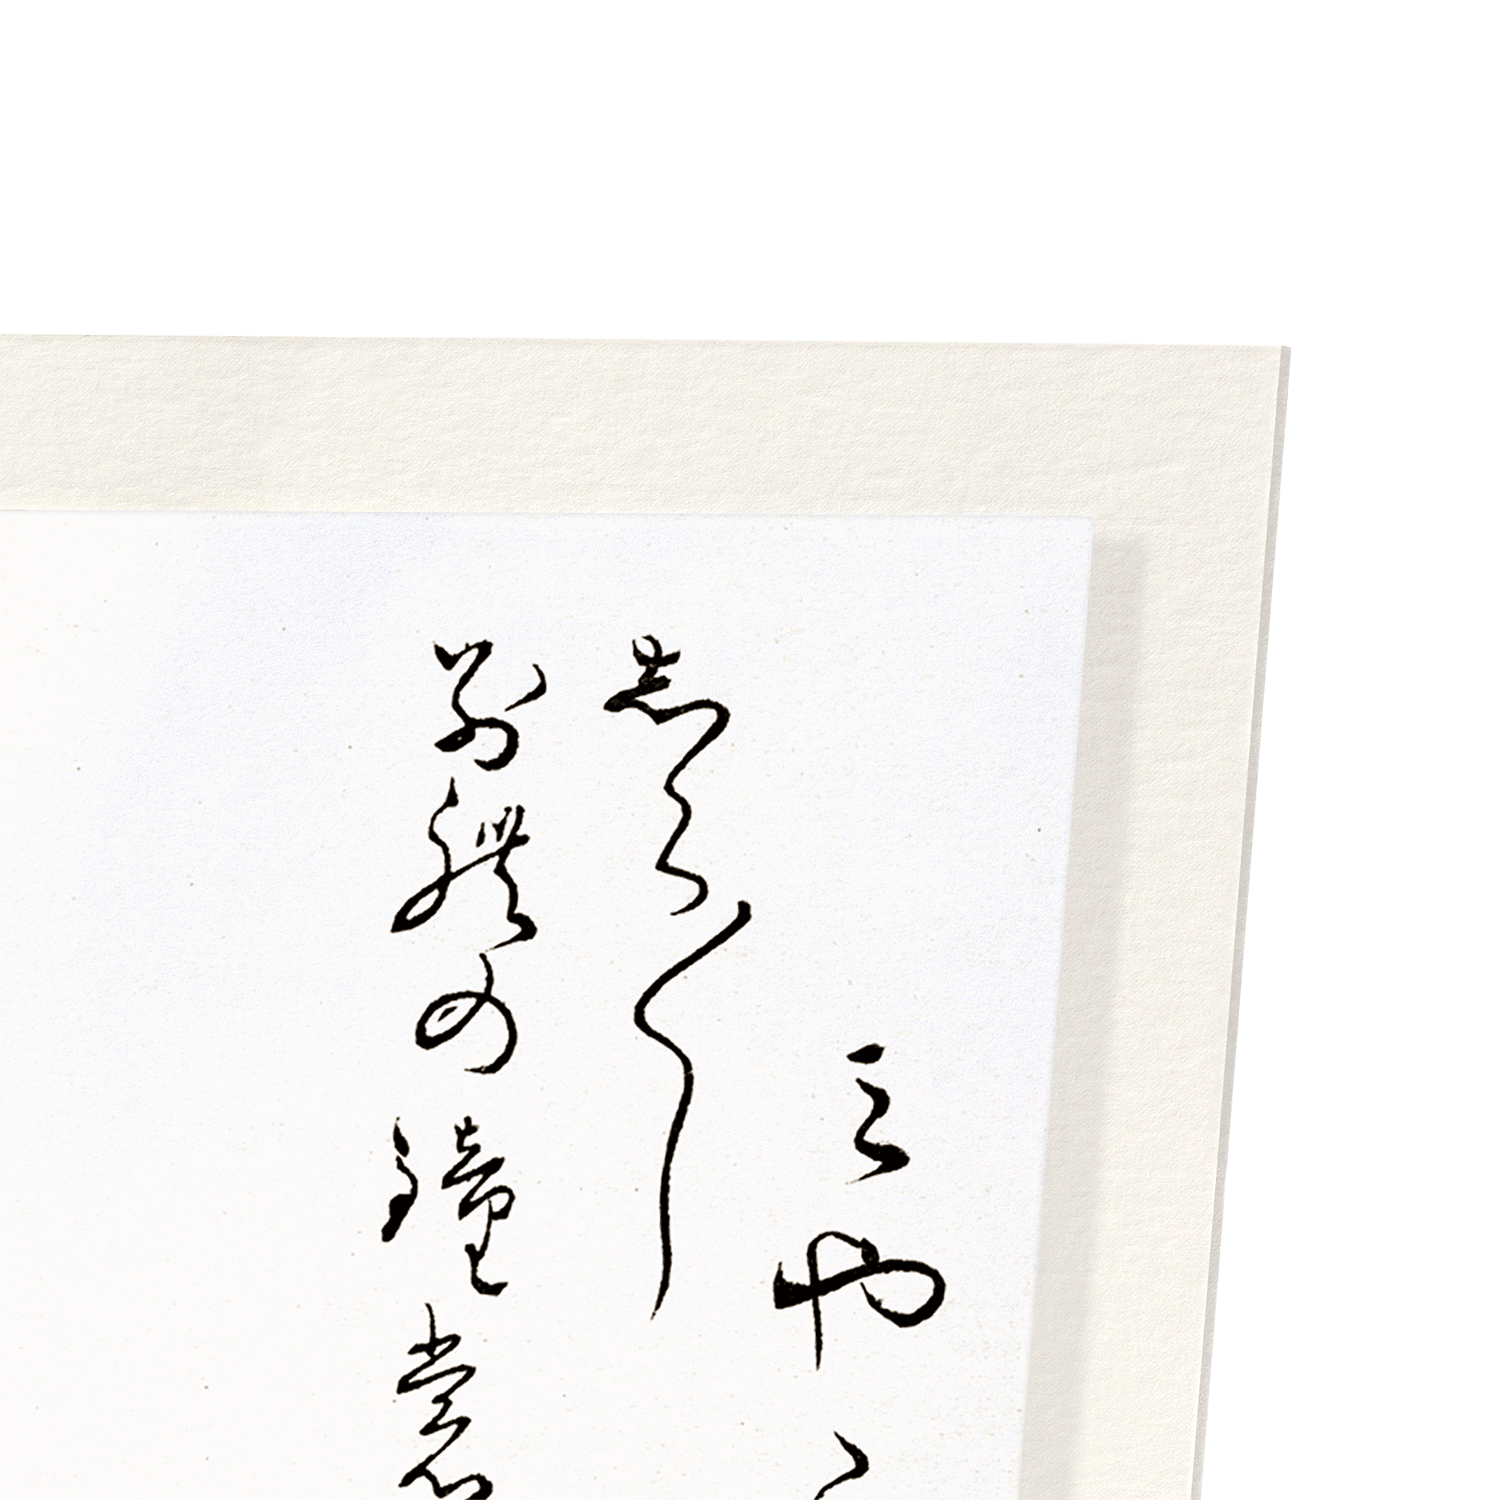 COURTESAN MIYAKONO READING (1776): Japanese Art Print